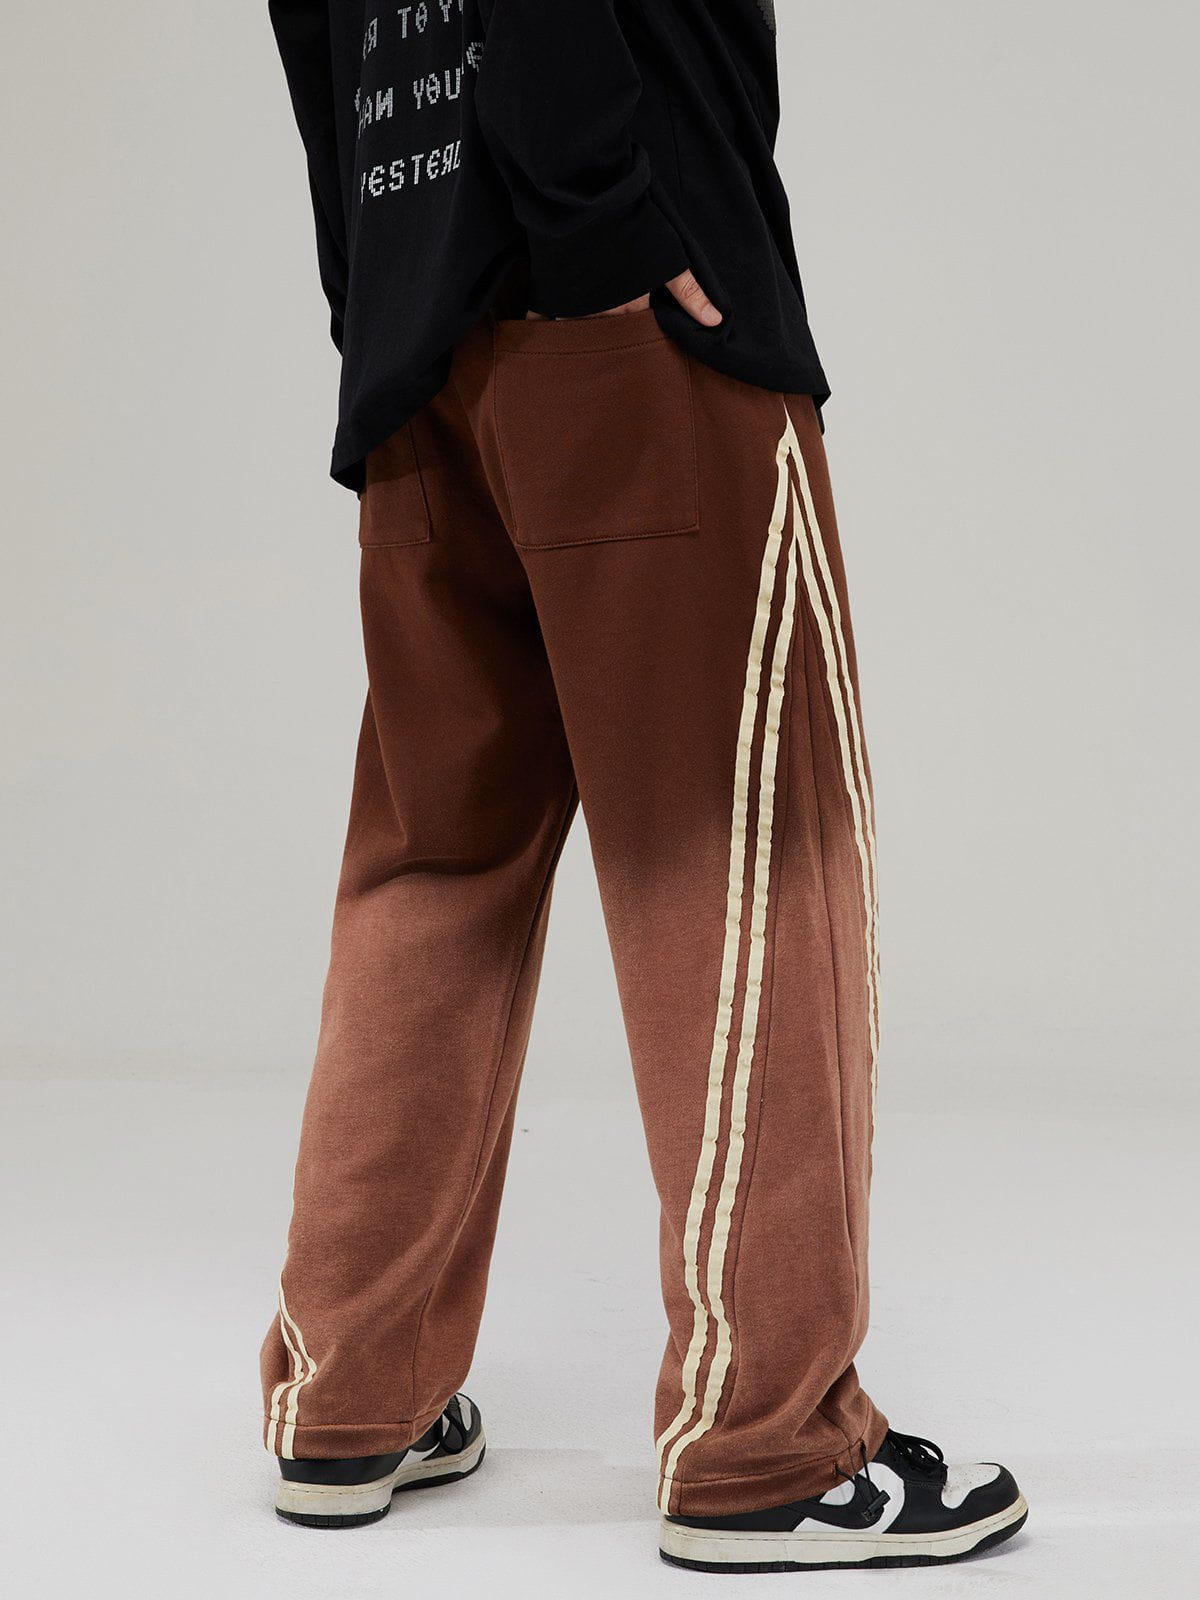 Majesda® - Gradient Color Sweatpants outfit ideas streetwear fashion